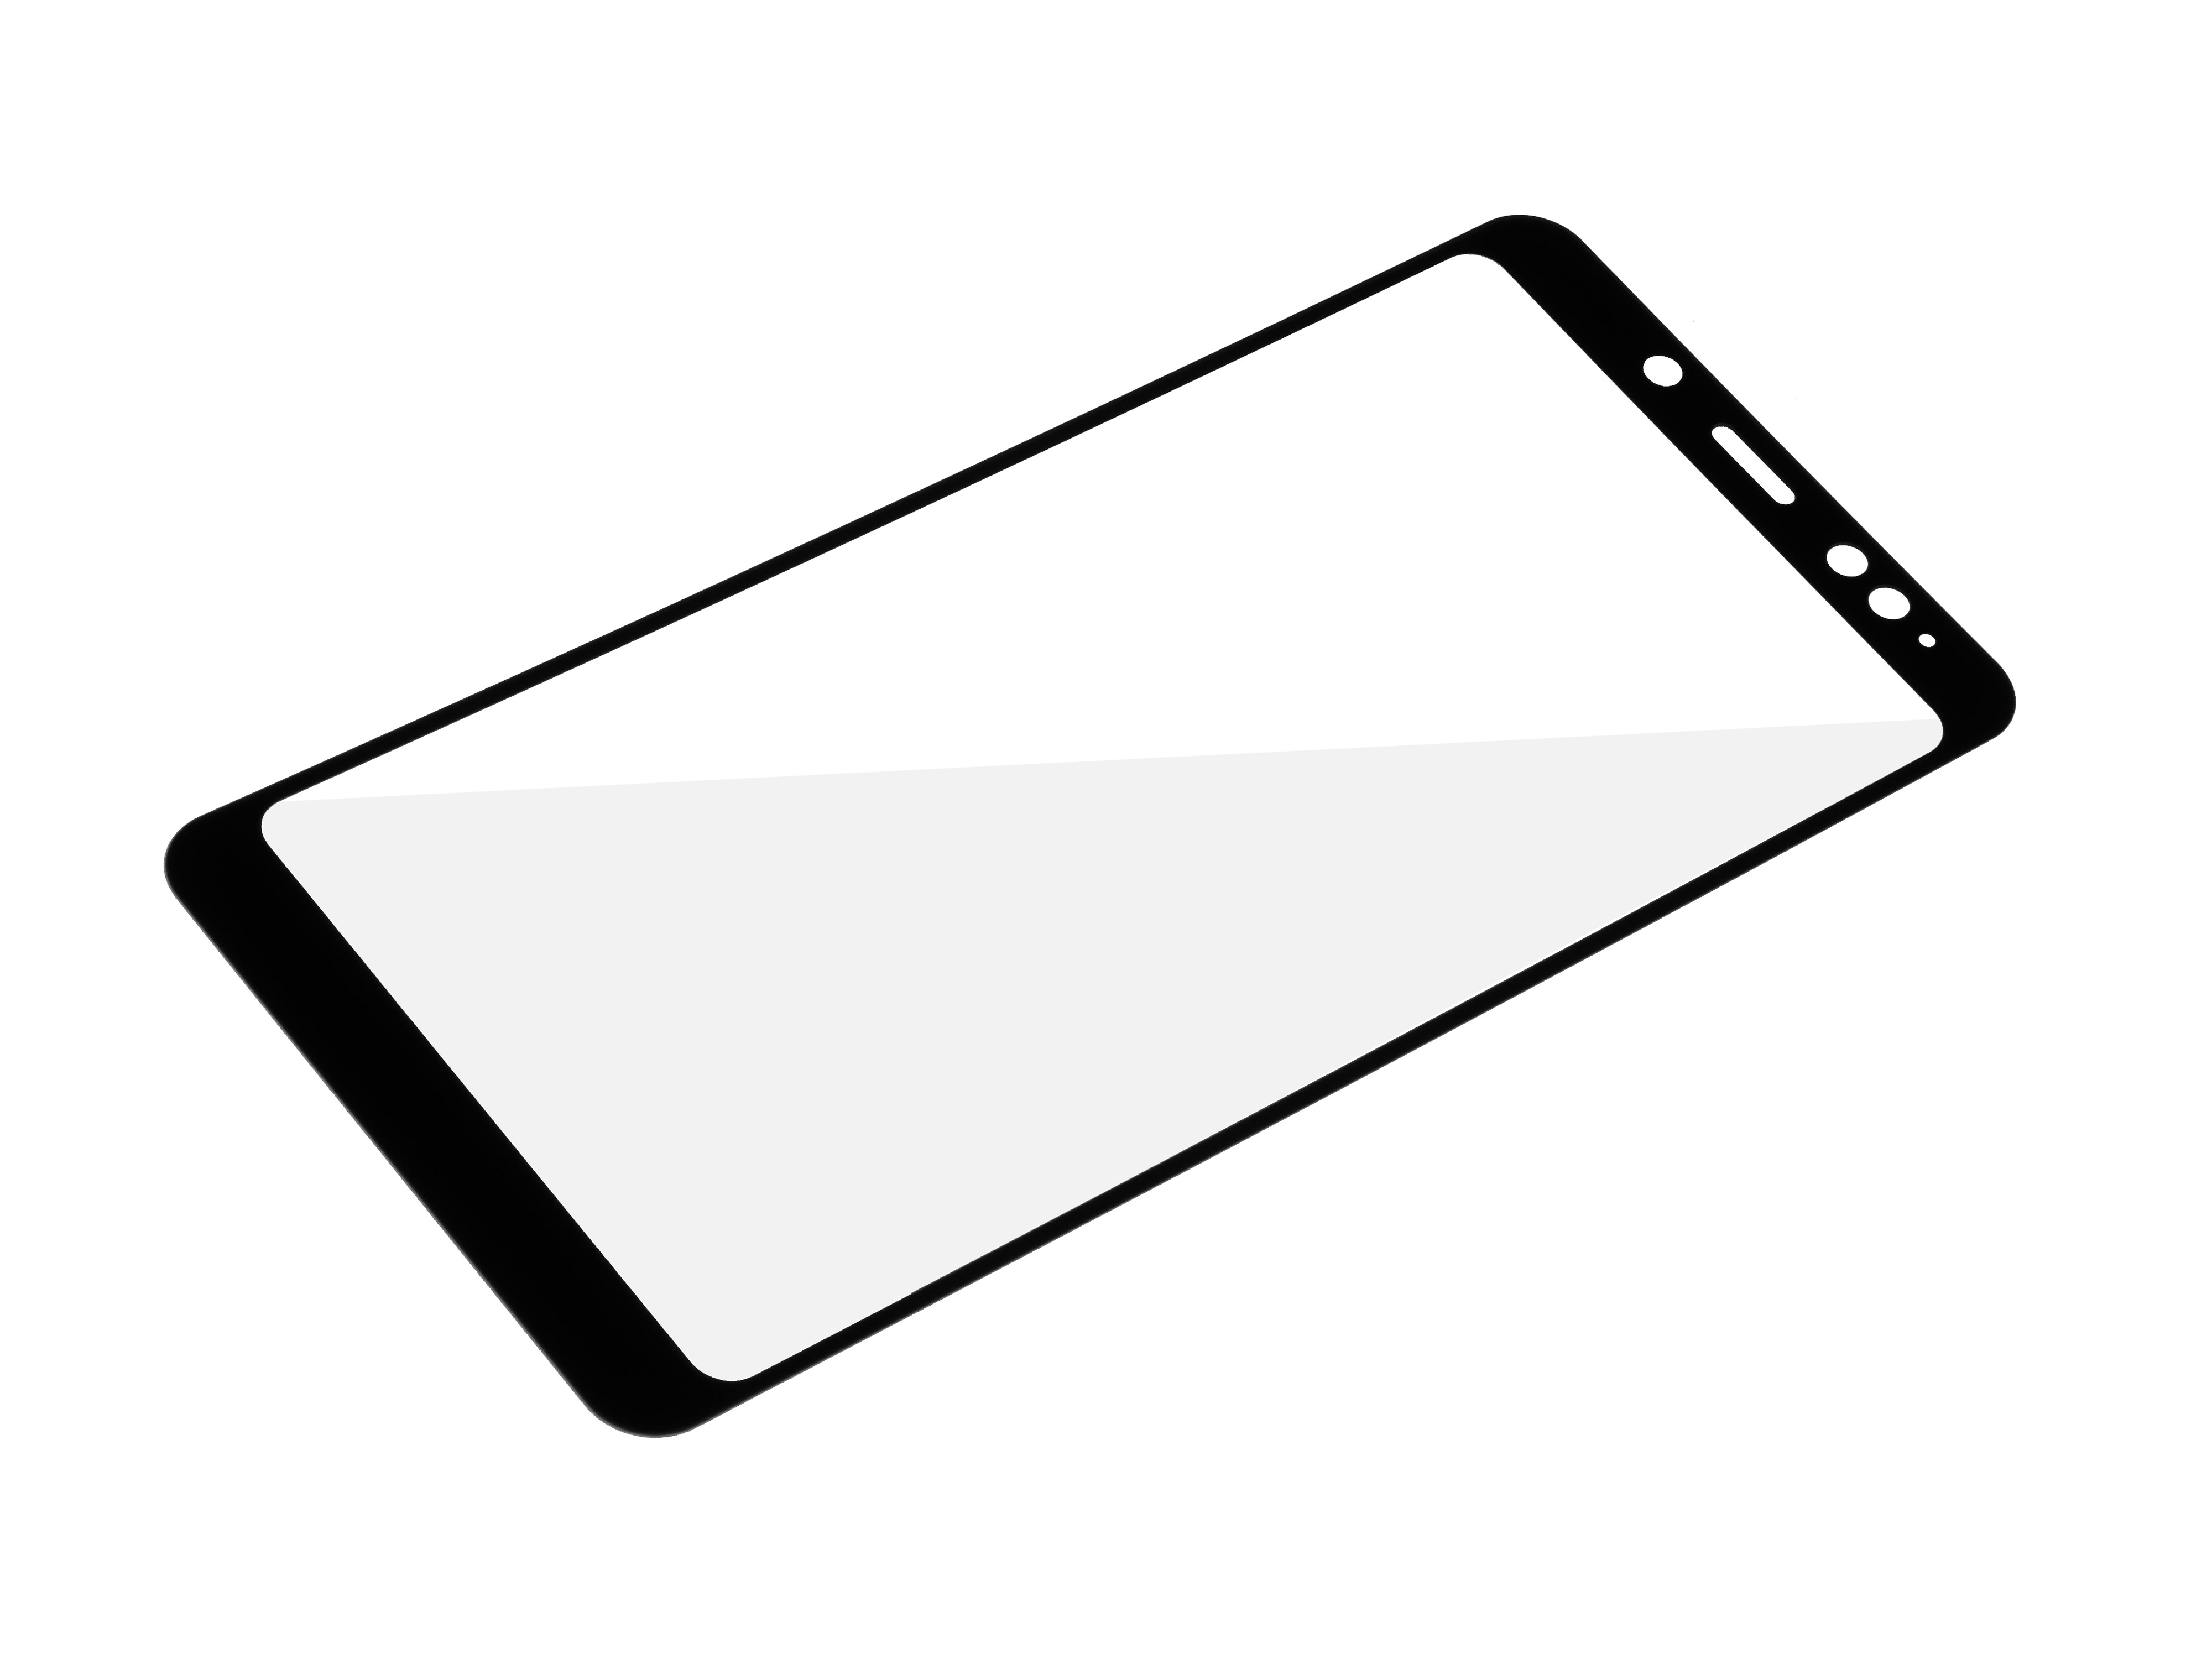 Screen Protector for Xiaomi Redmi Note 5 Pro Tempered Glass GC Clarity 9H Military Grade Invisible Cover